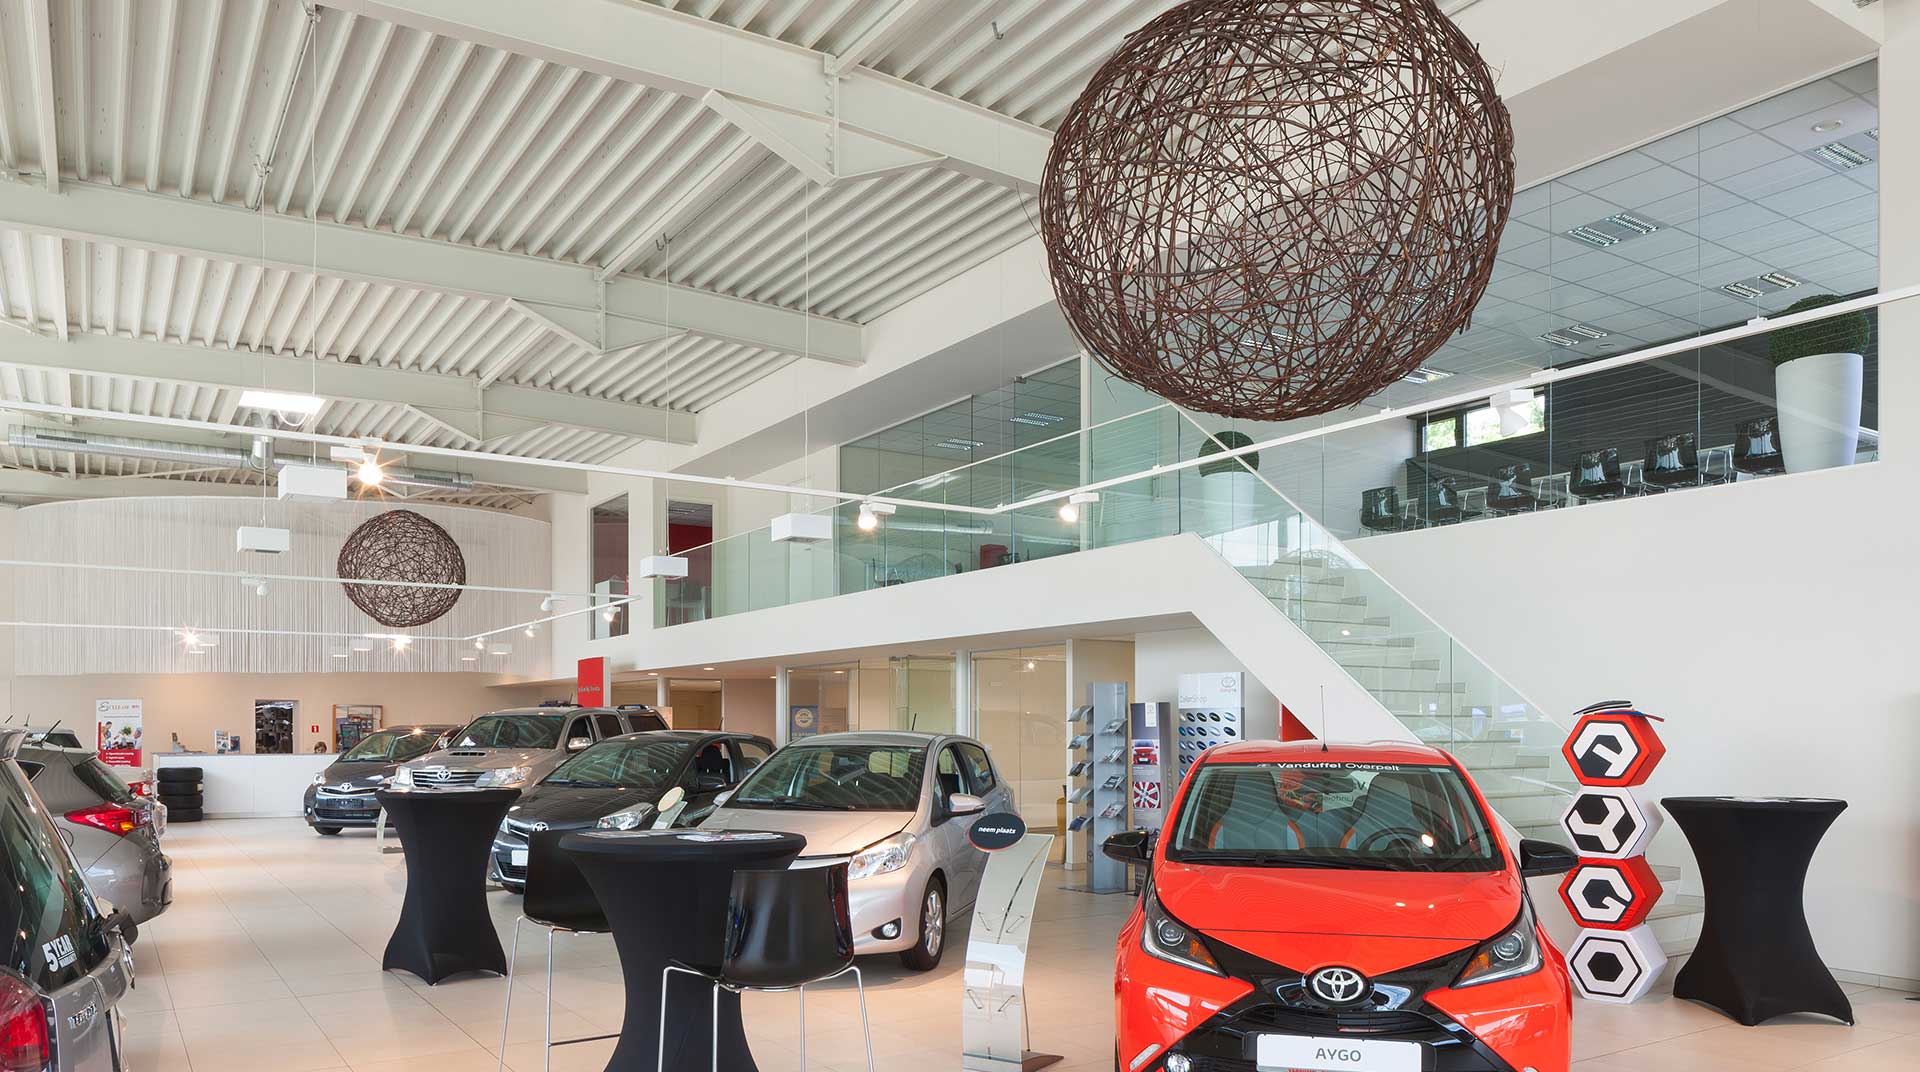 I4U, interieur for you, project Toyota Vanduffel.